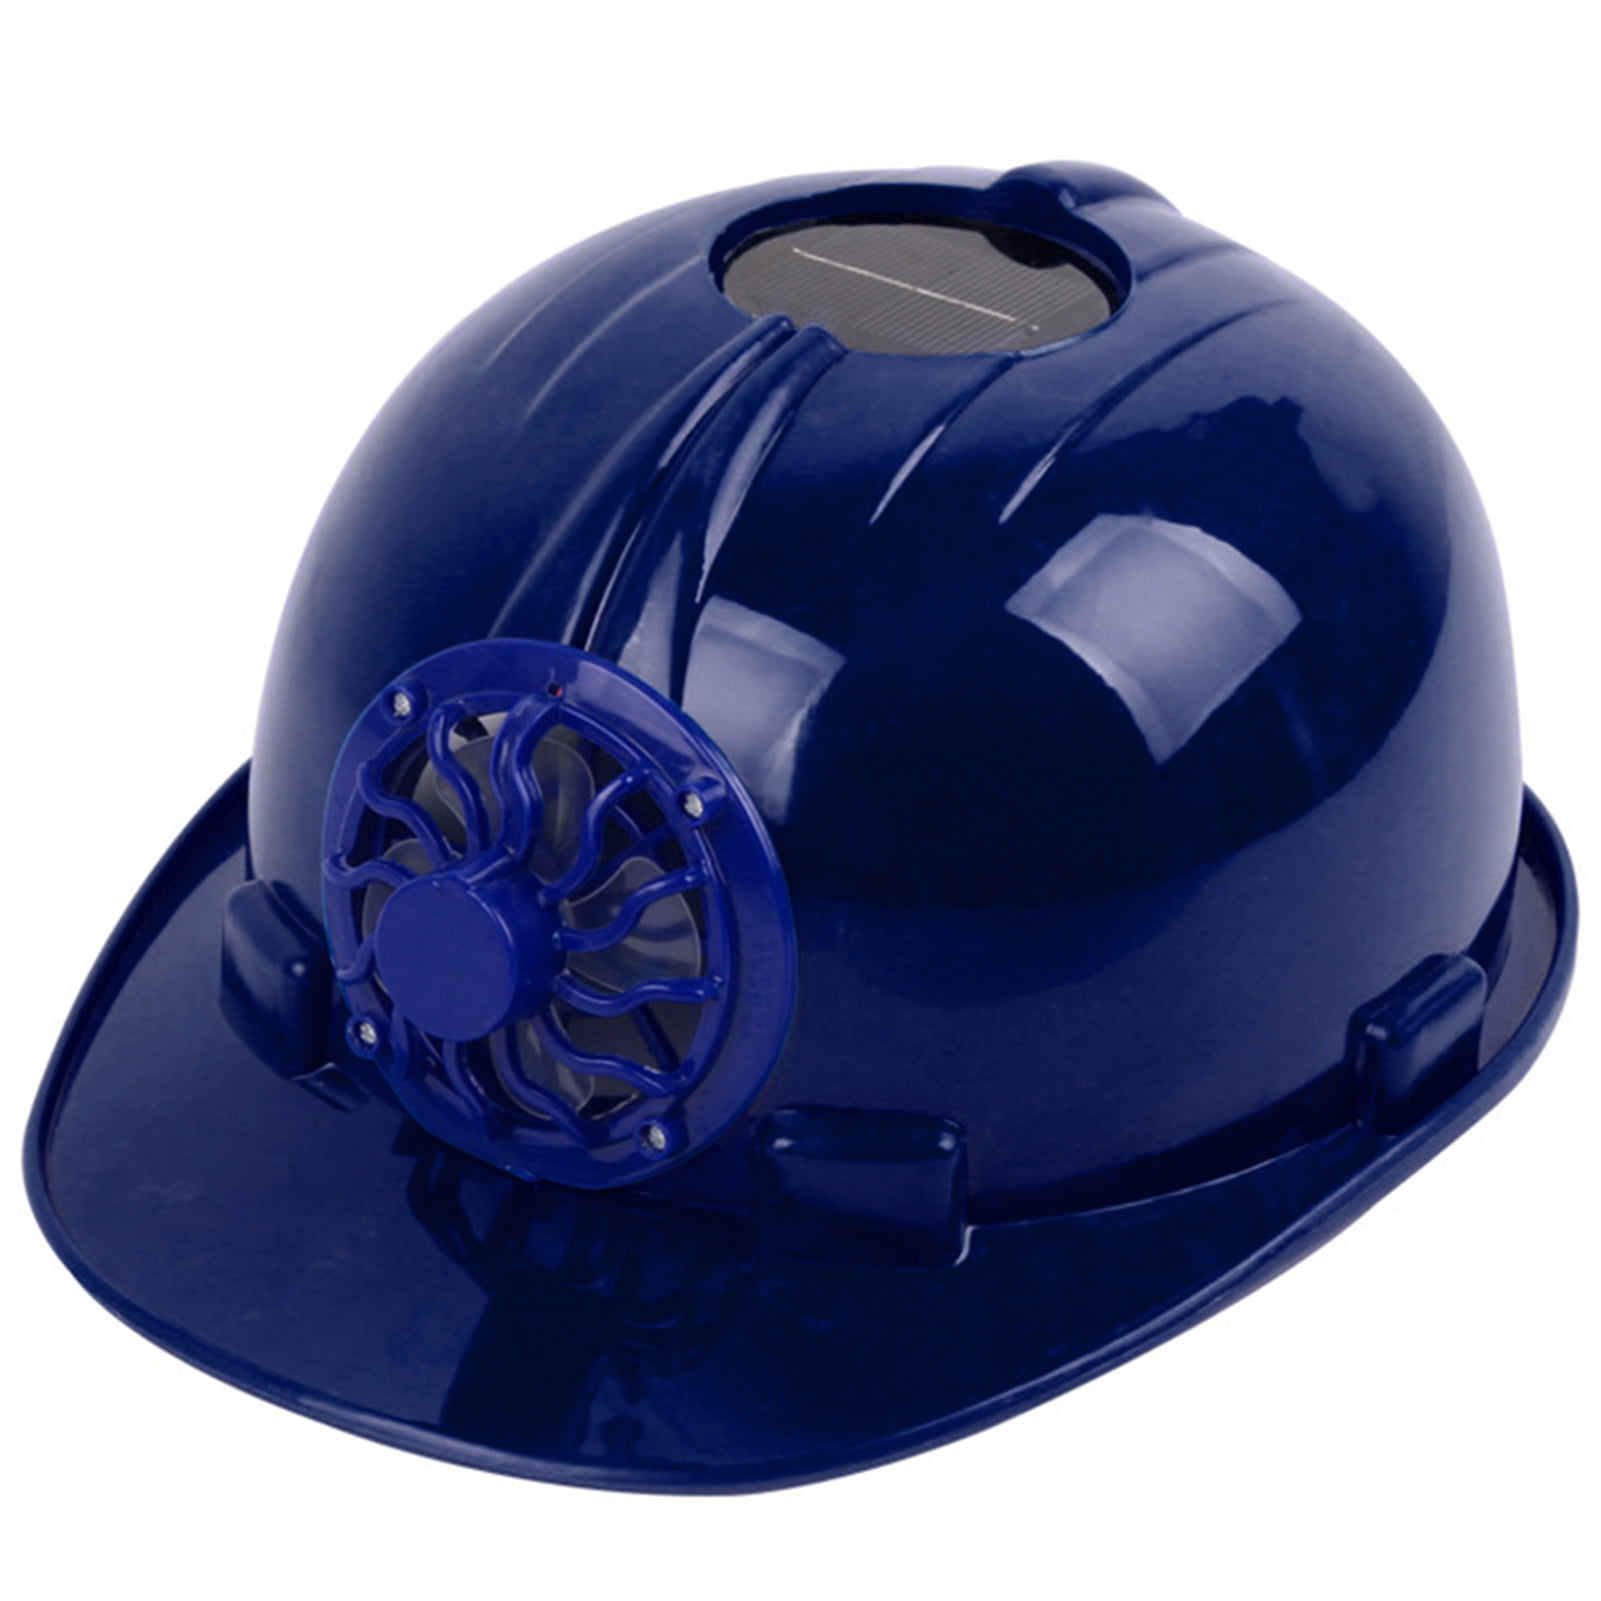 Pro Guard Helmet Repair Kit-8027